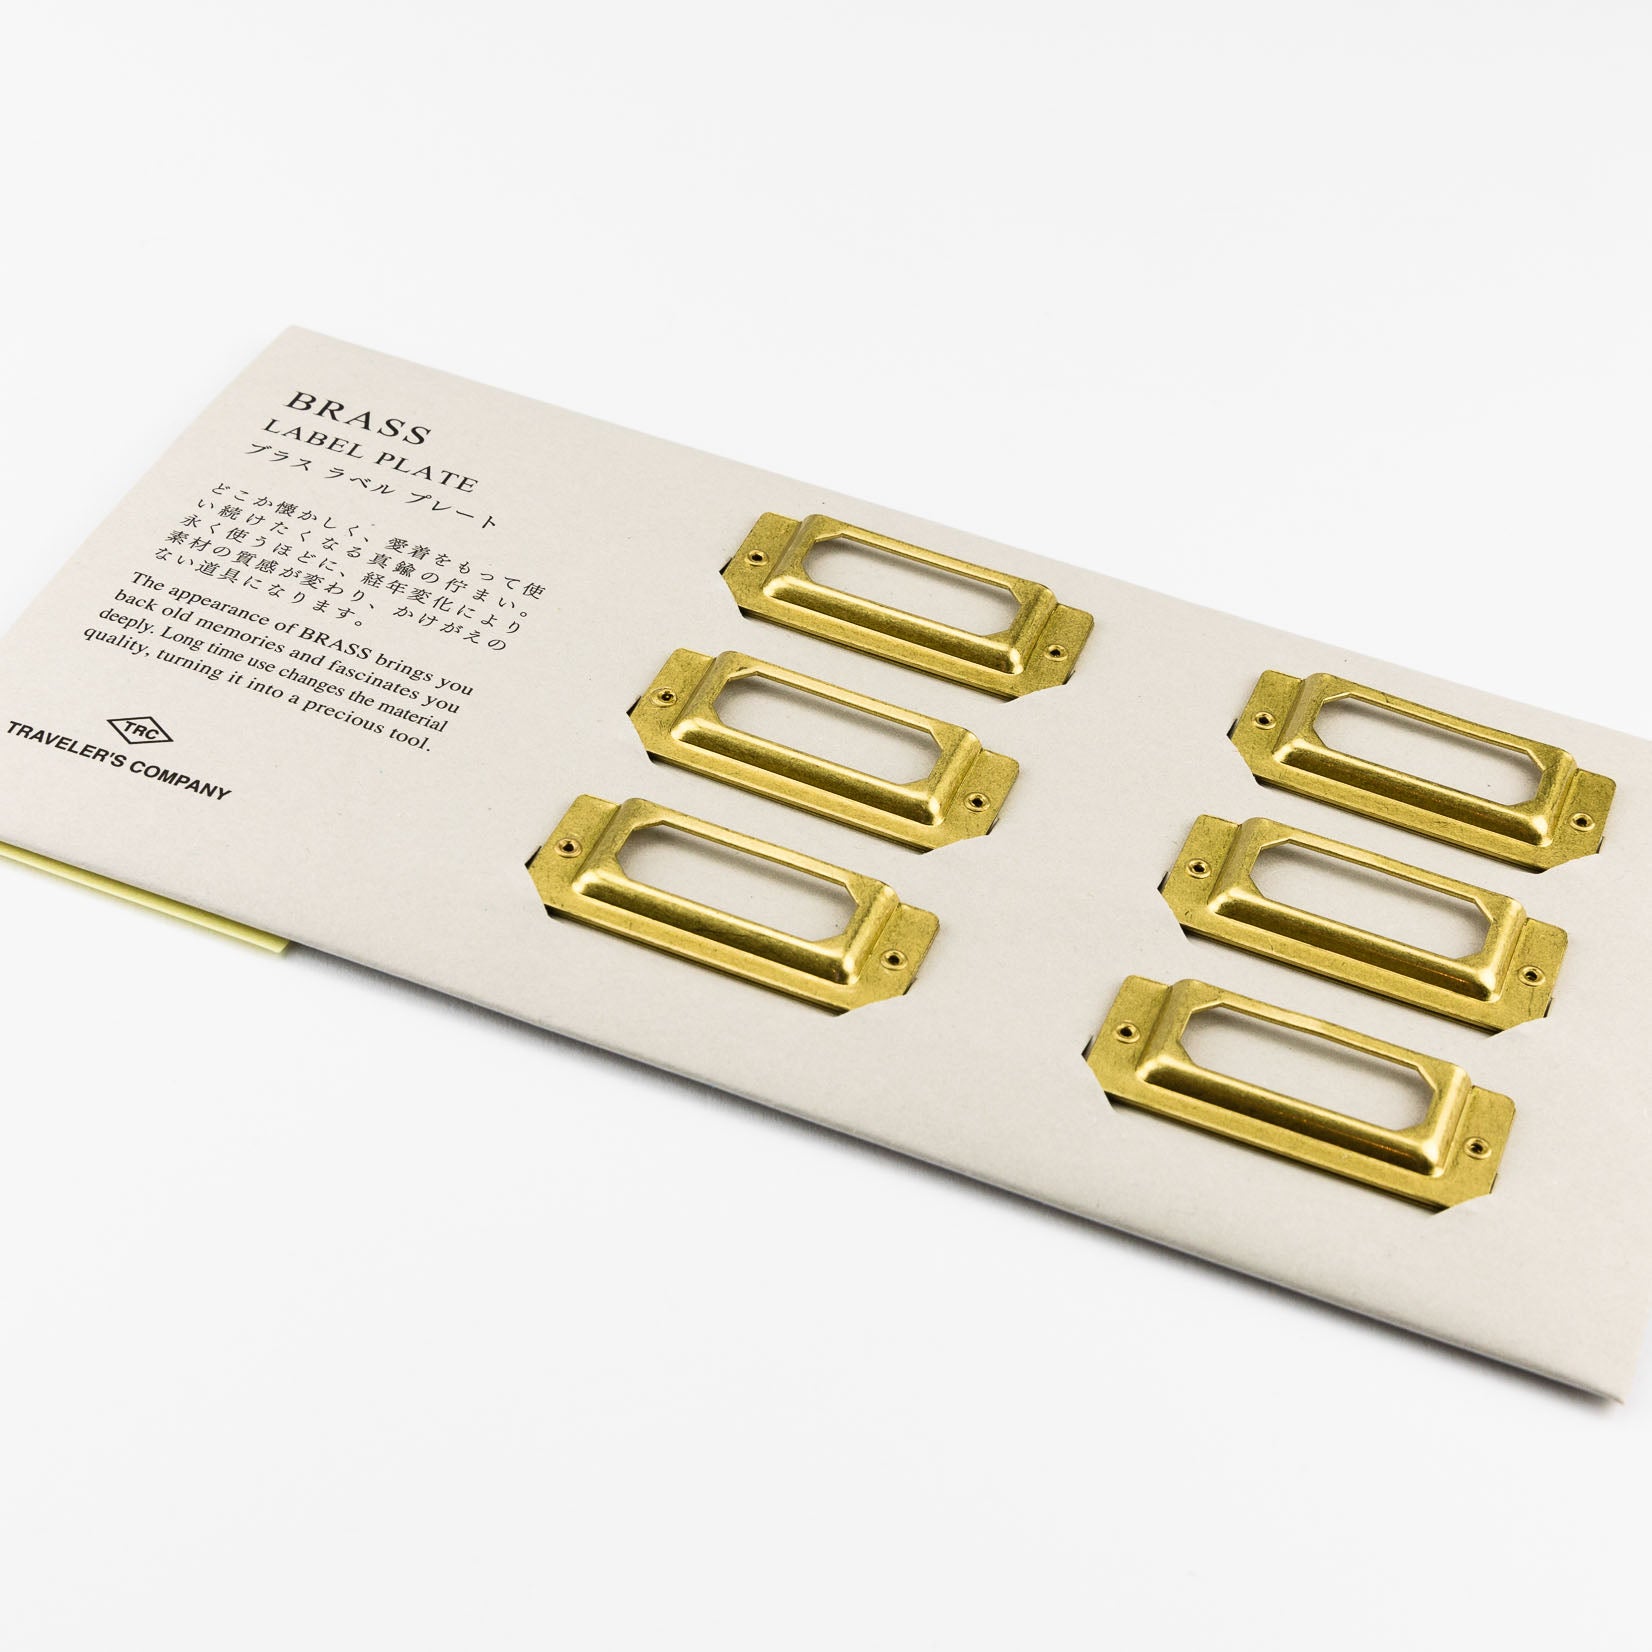 Traveler's Company Brass Label Plates Messing Etikettenhalter 